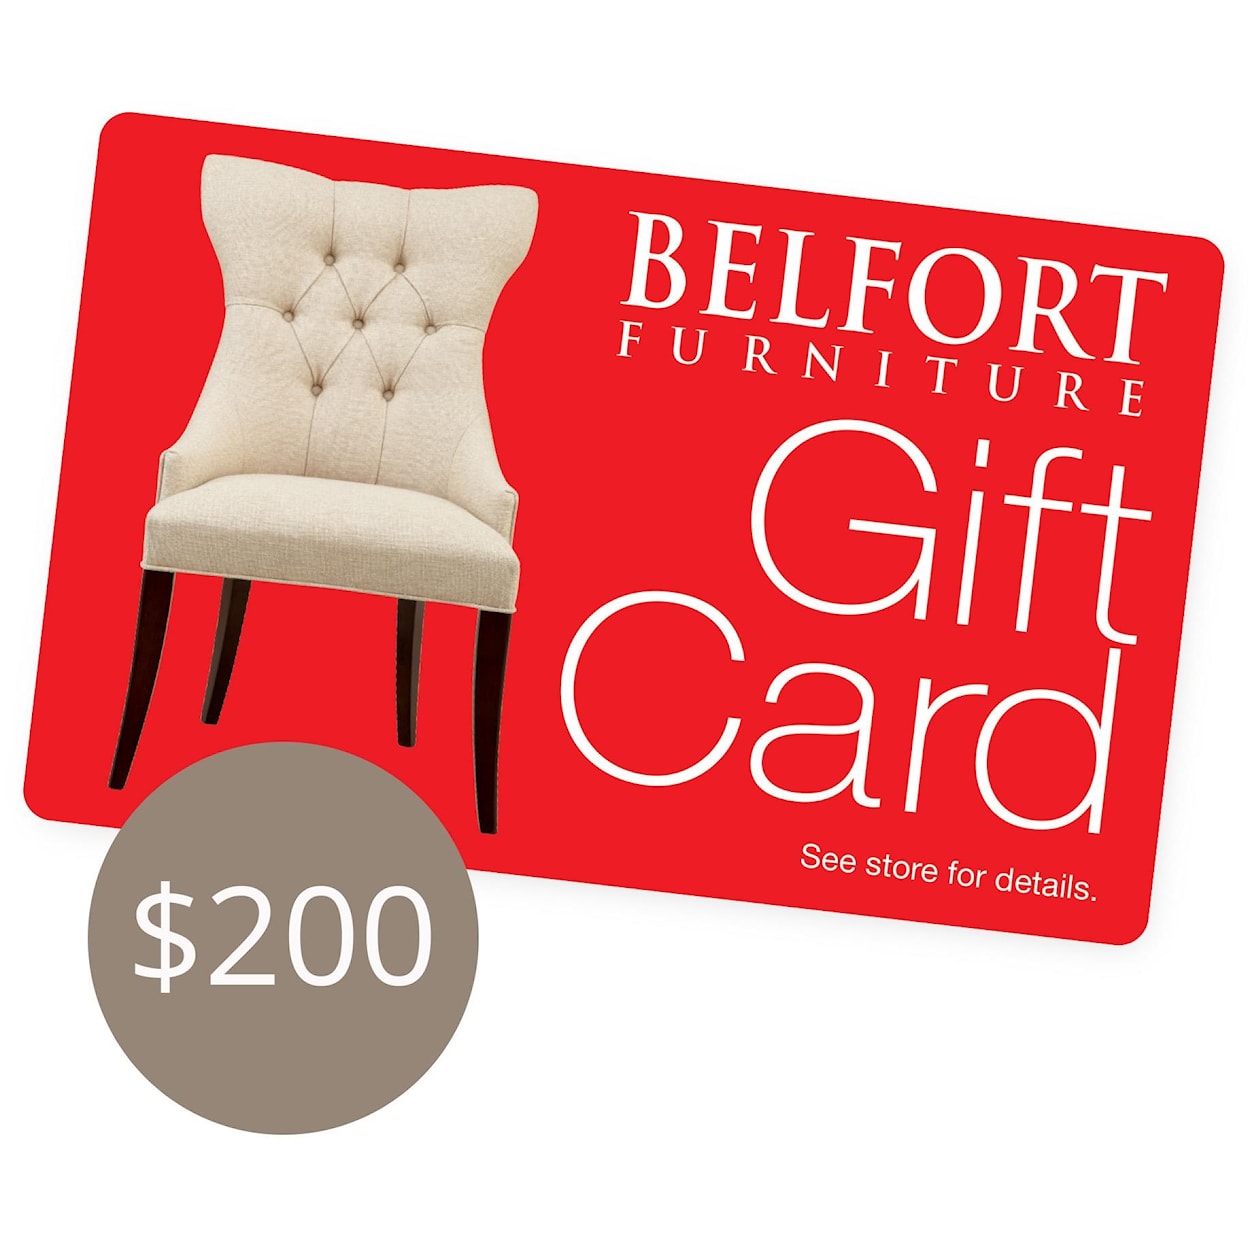 Belfort Furniture Gift Cards $200 Belfort Gift Card